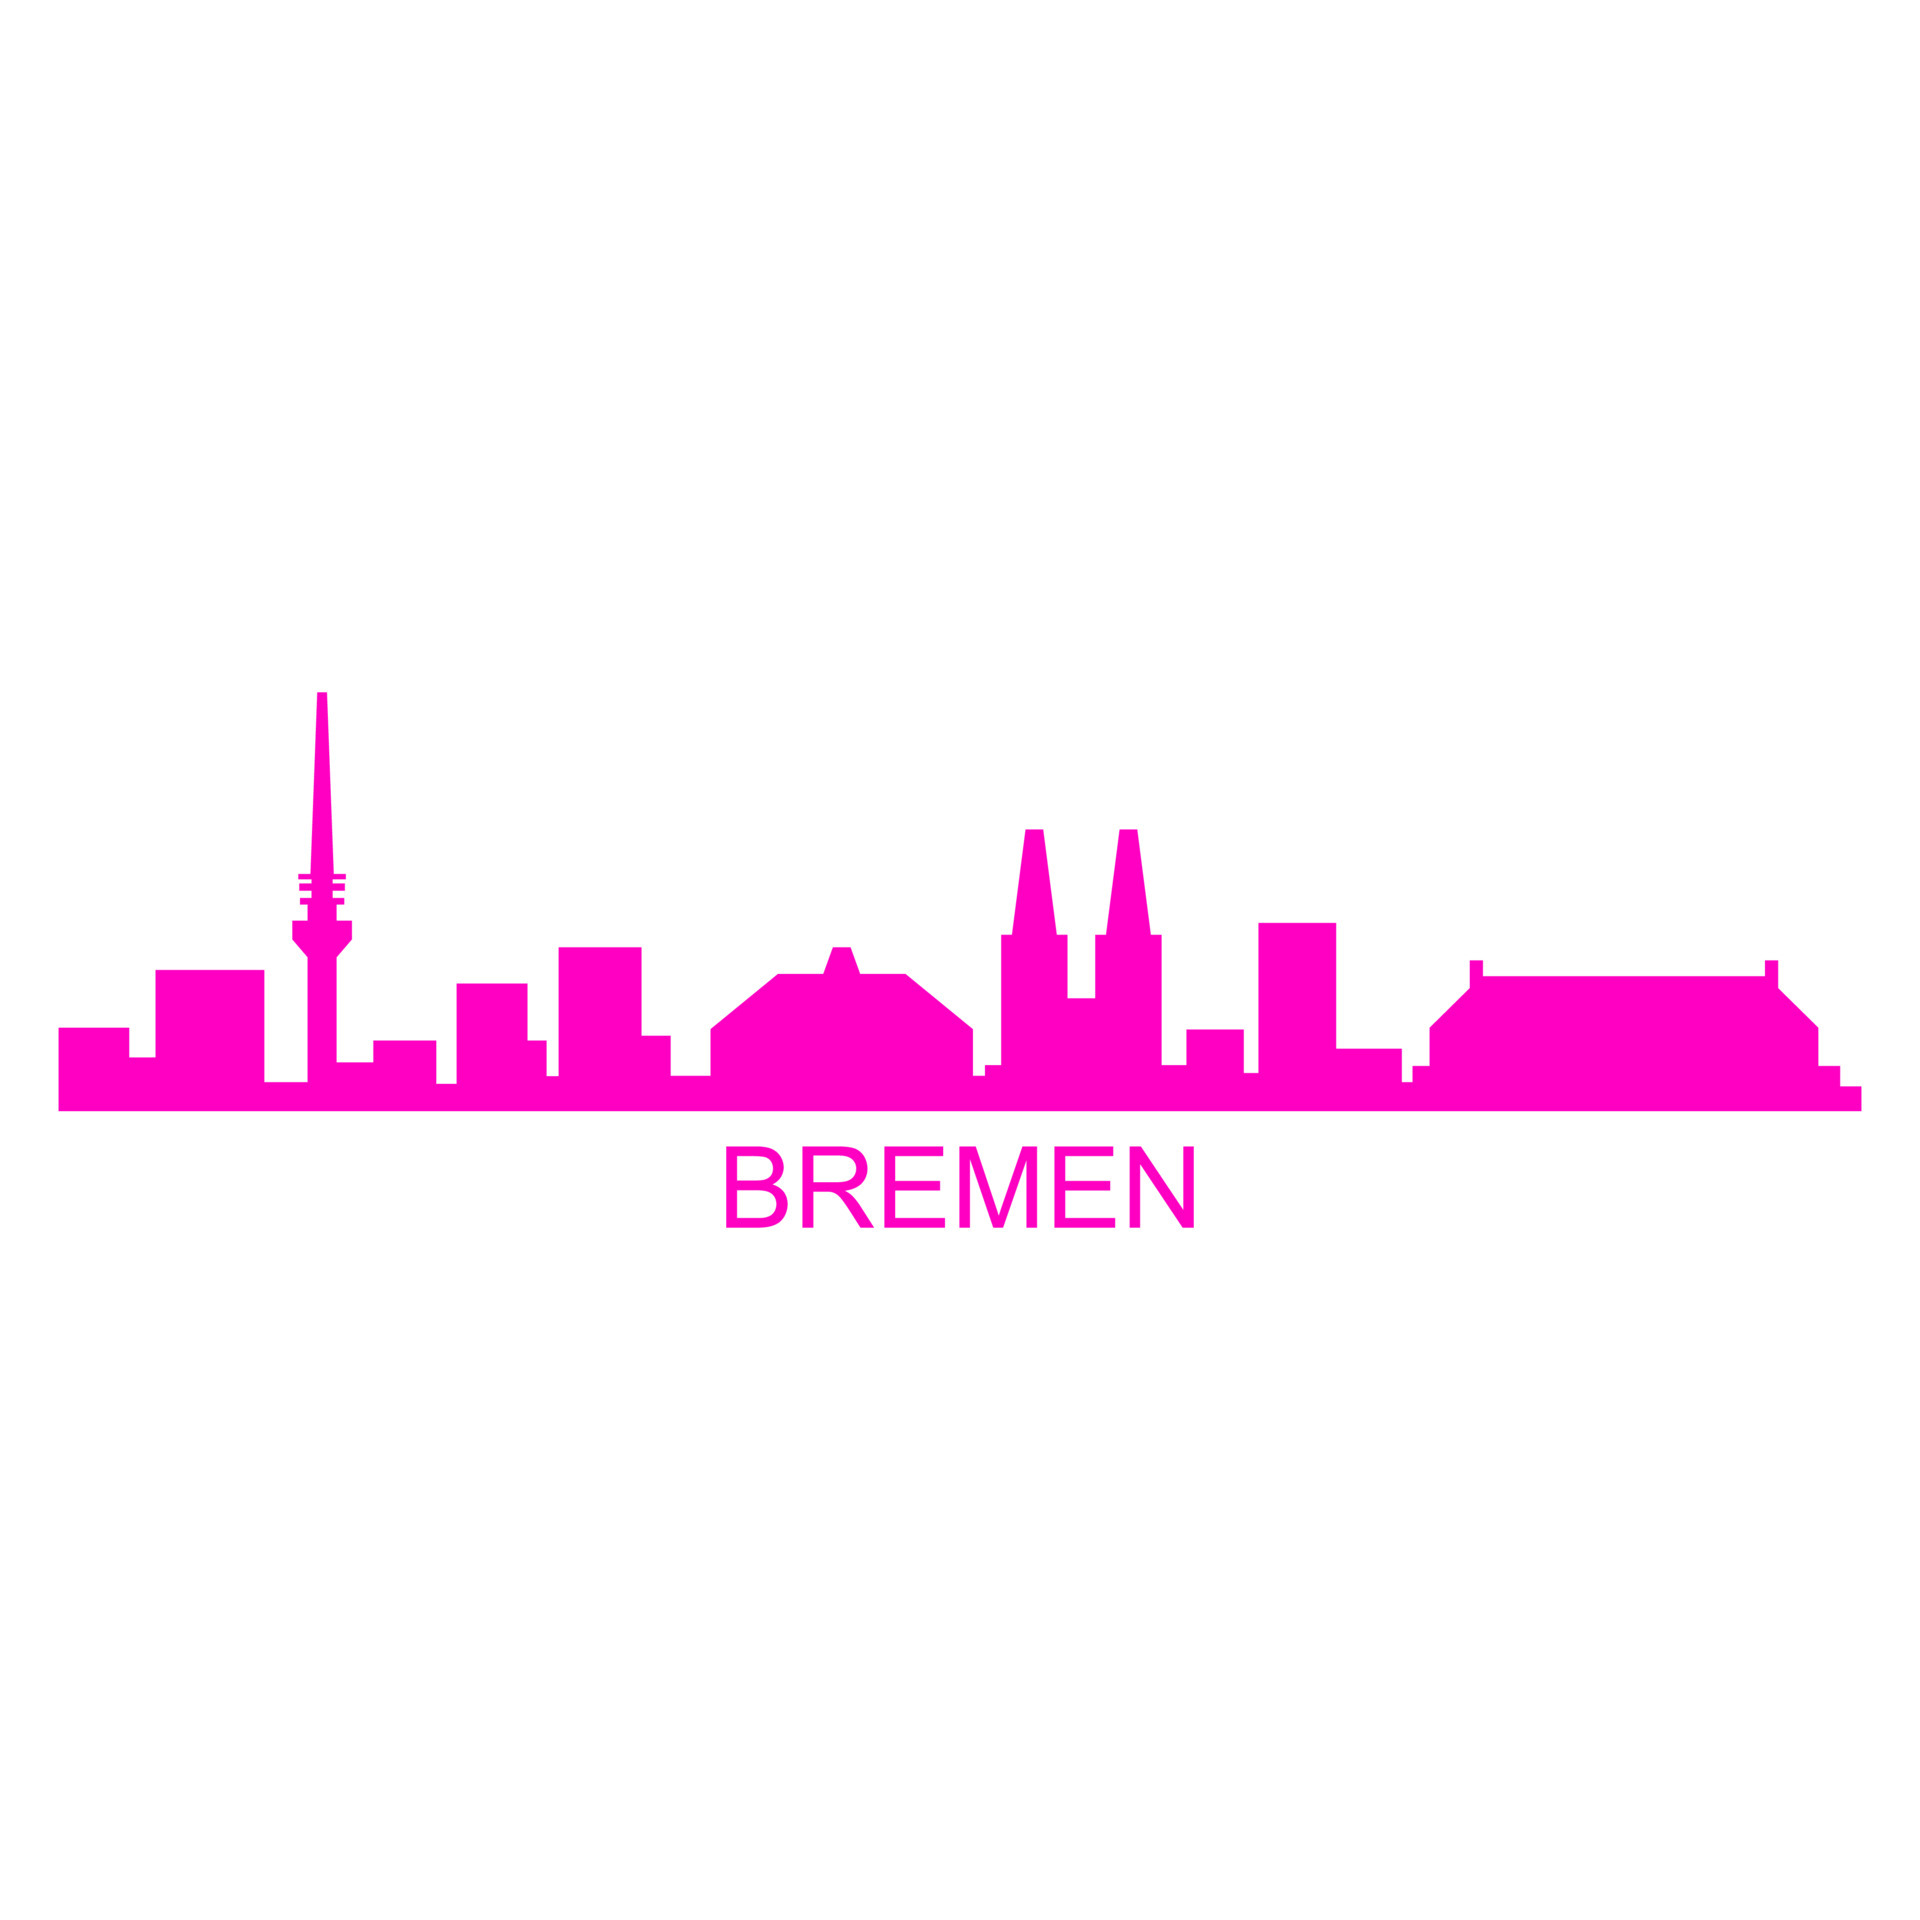 Bremen Skyline